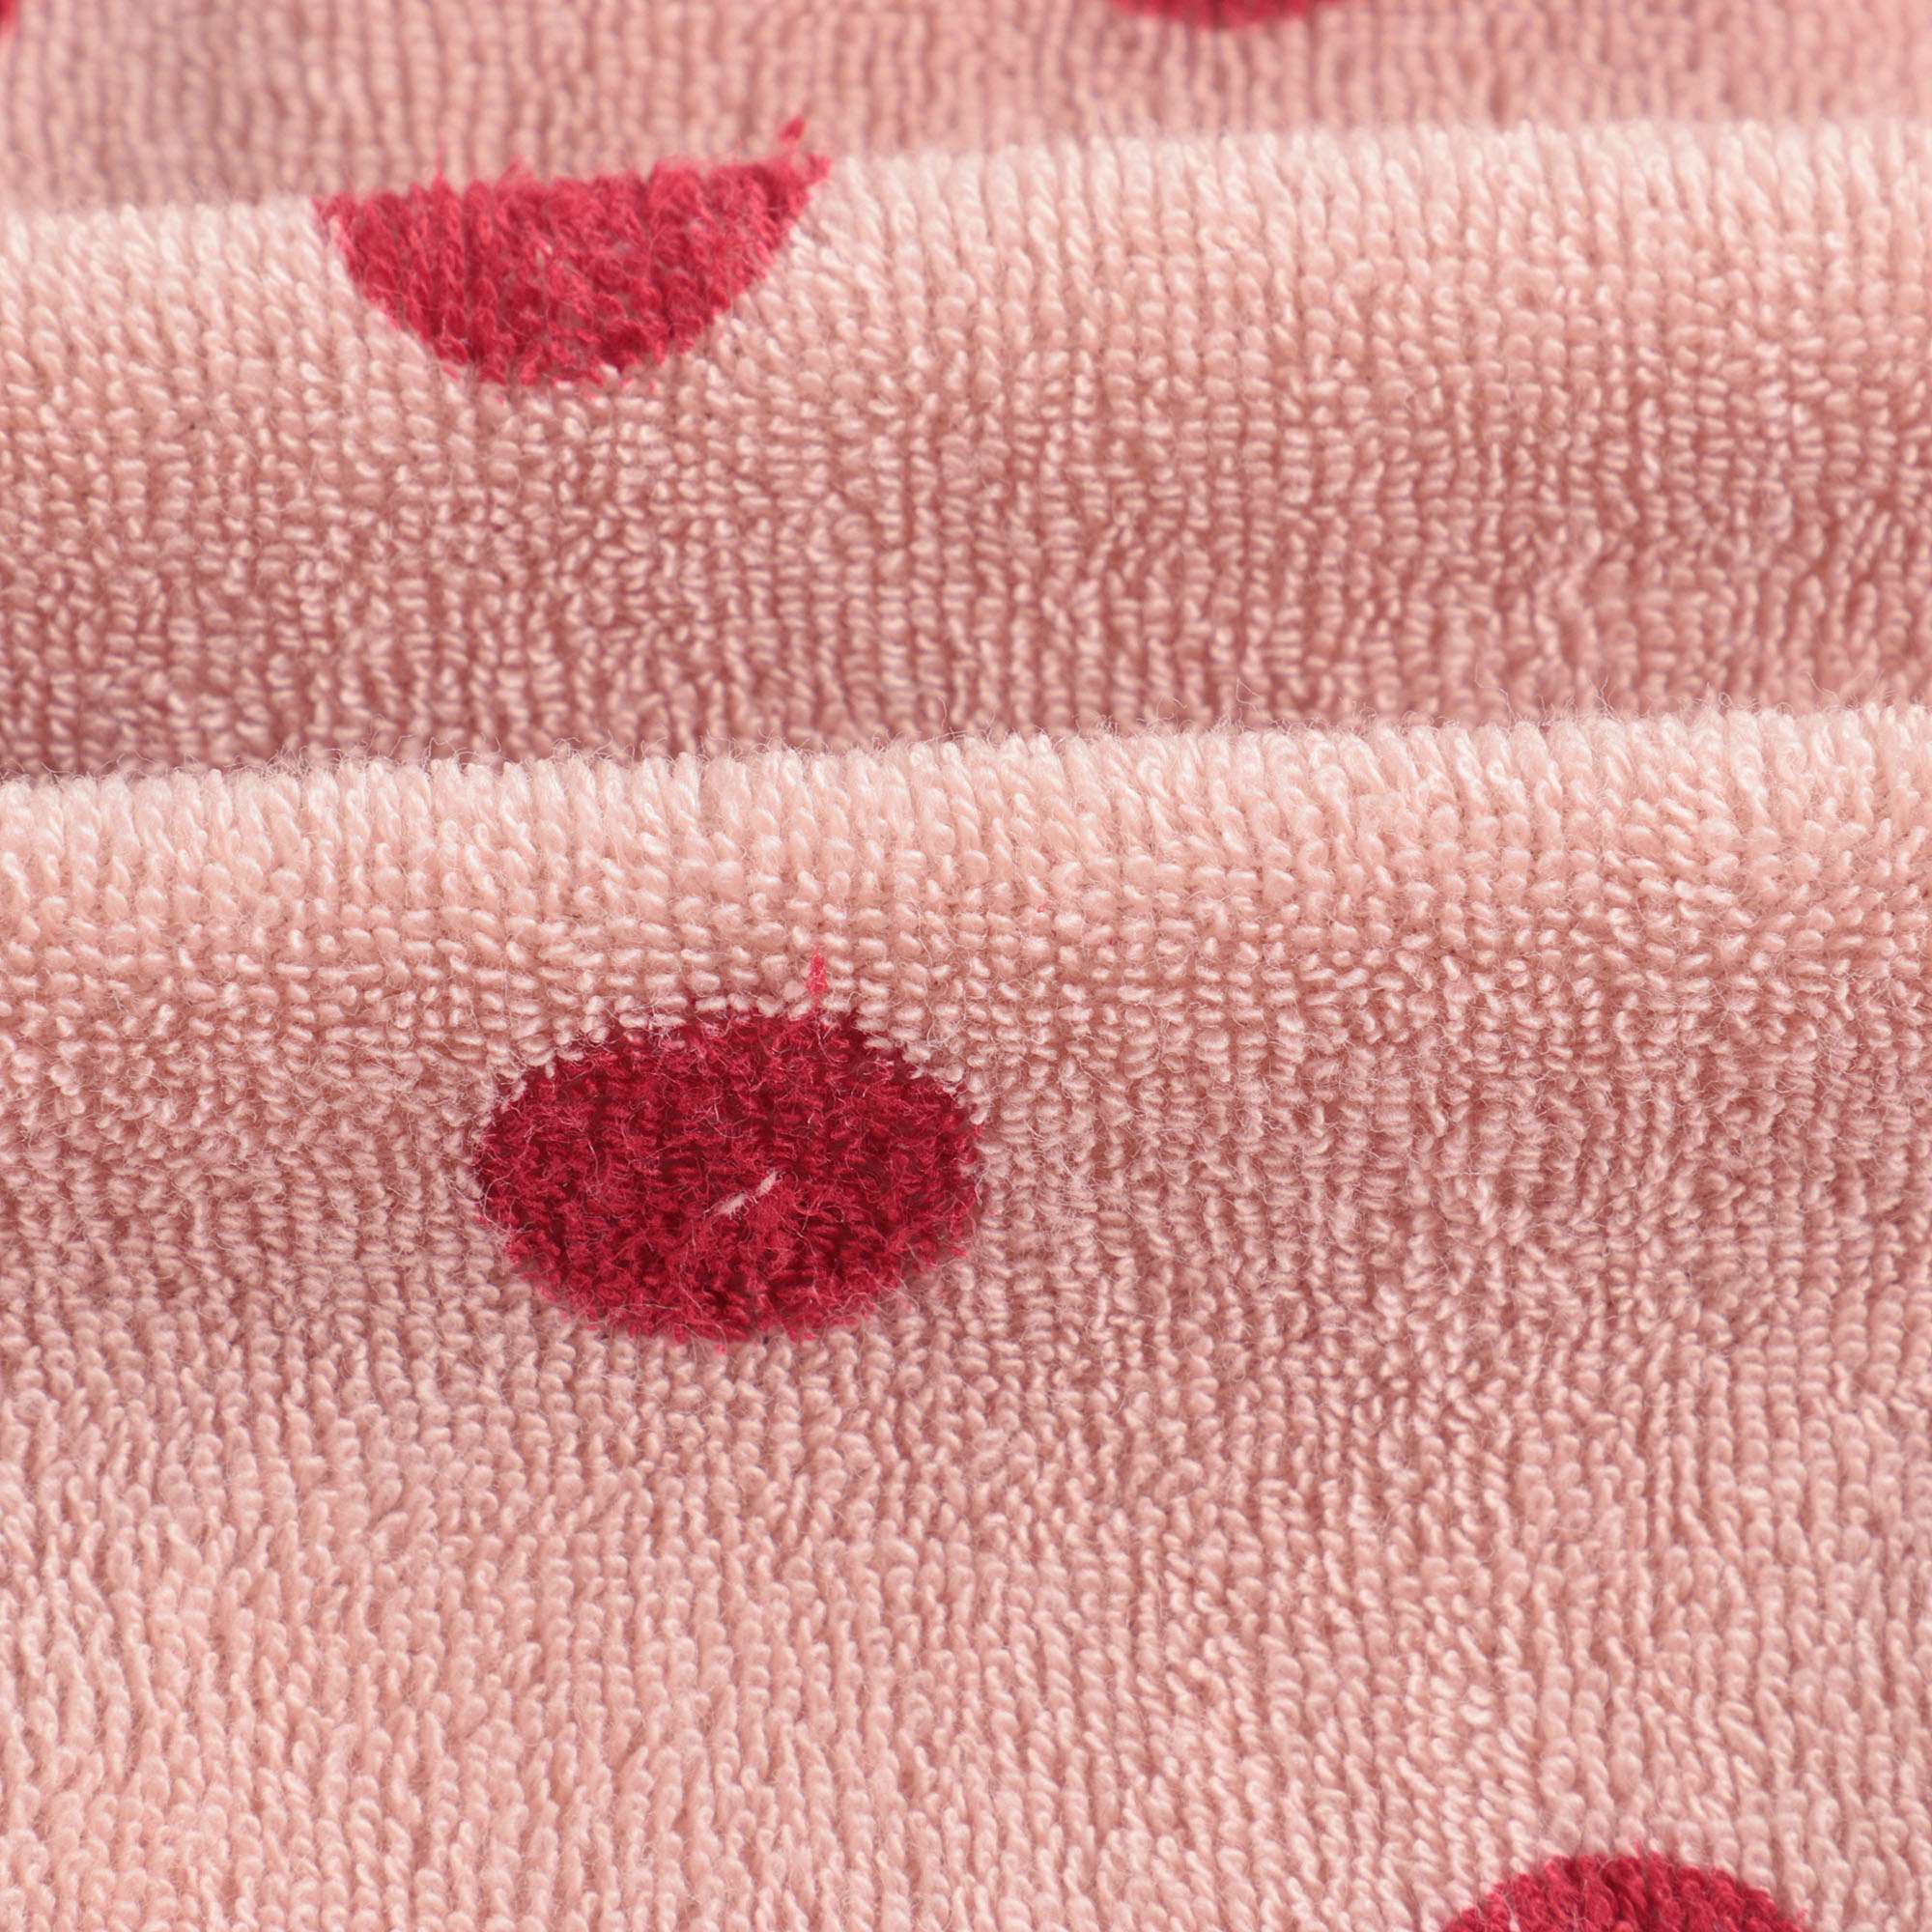 Girls Pink Dots Cotton Siamese Shorts